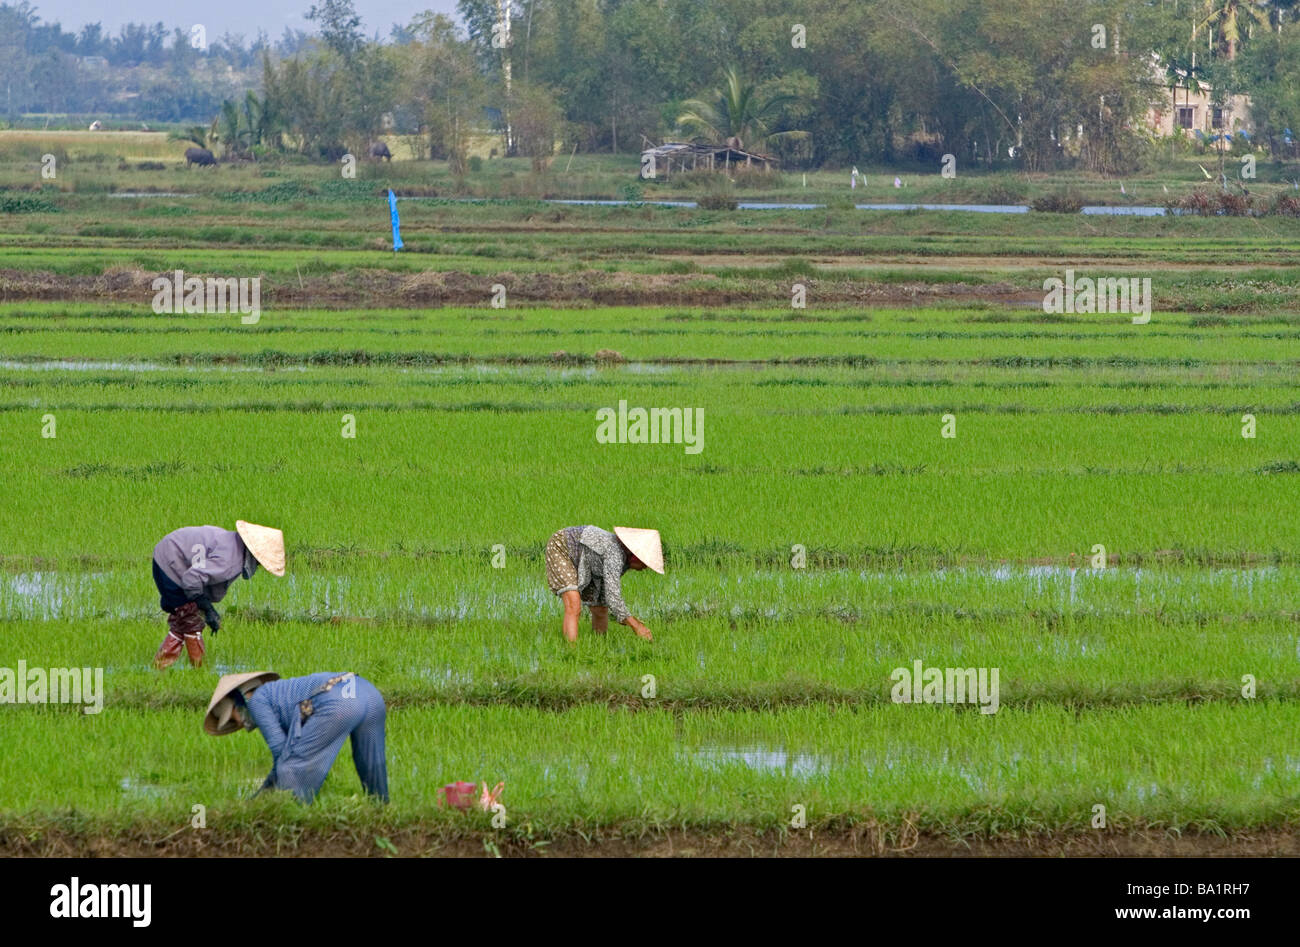 Vietnamese farmers tend to a rice paddy near Hoi An Vietnam Stock Photo